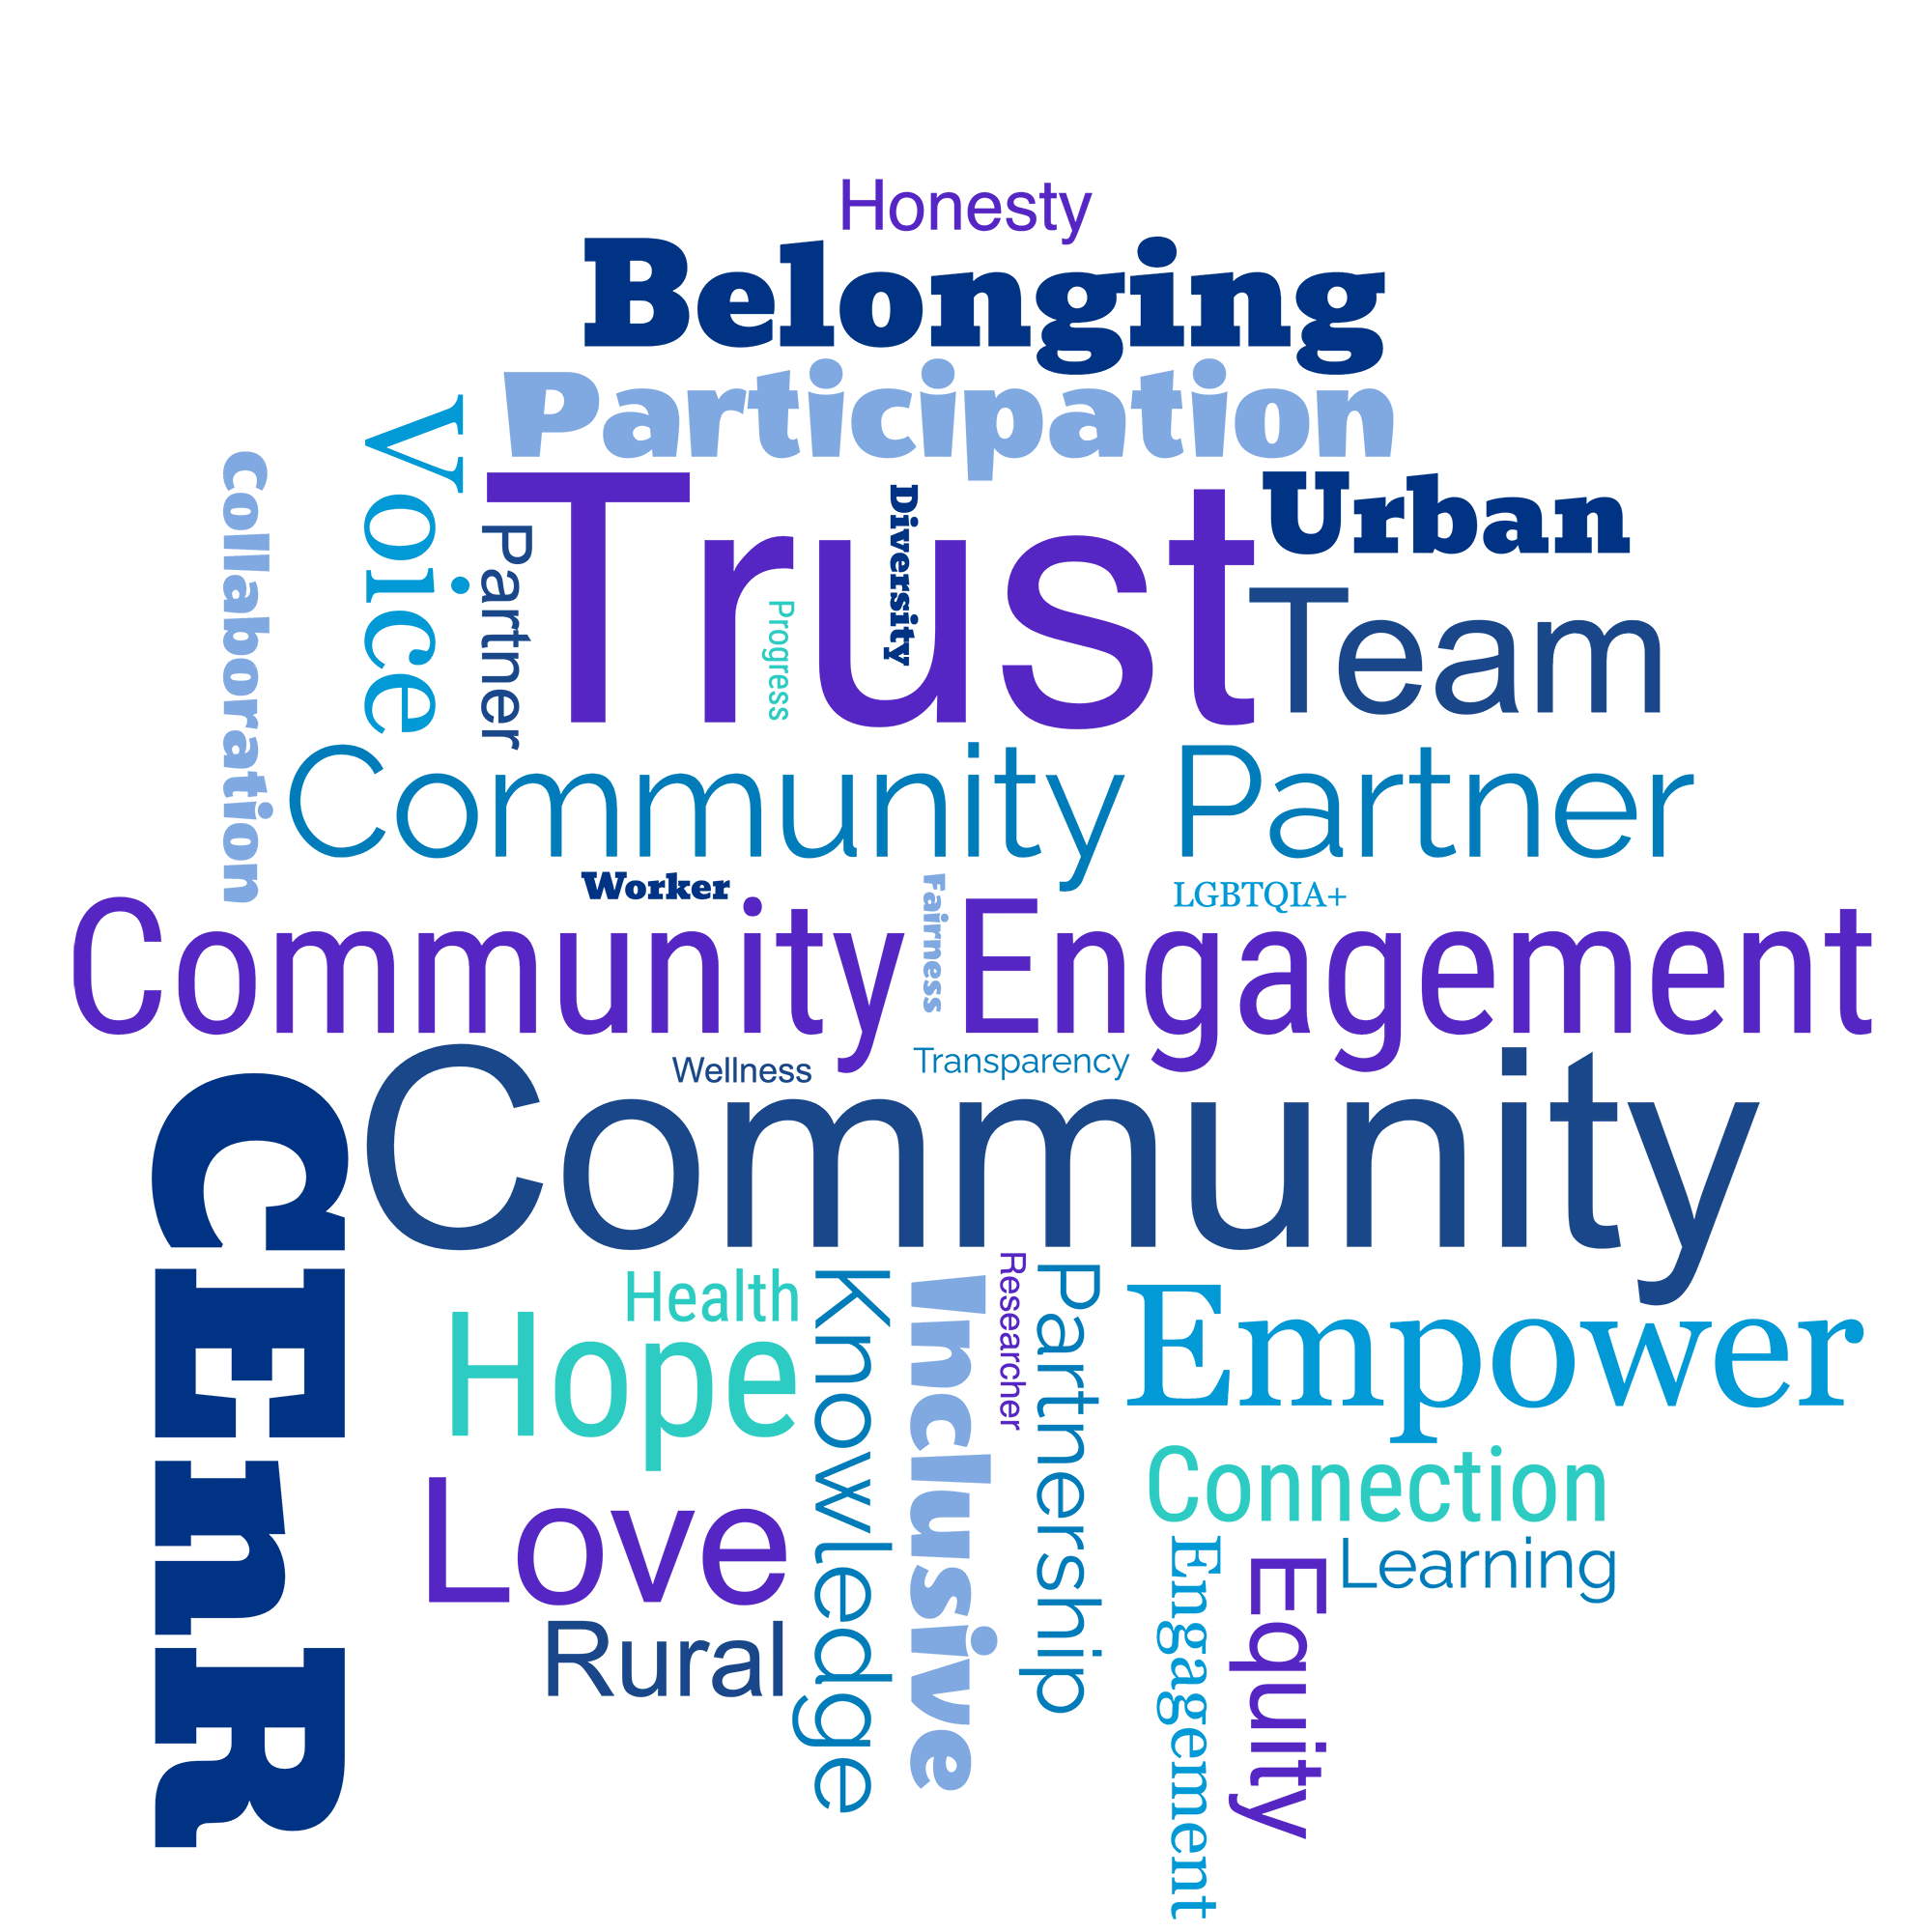 Word cloud with words including: Community, Community Engagement, Community Partner, CEnR, Trust, Belonging, Participation, Empower, Team.